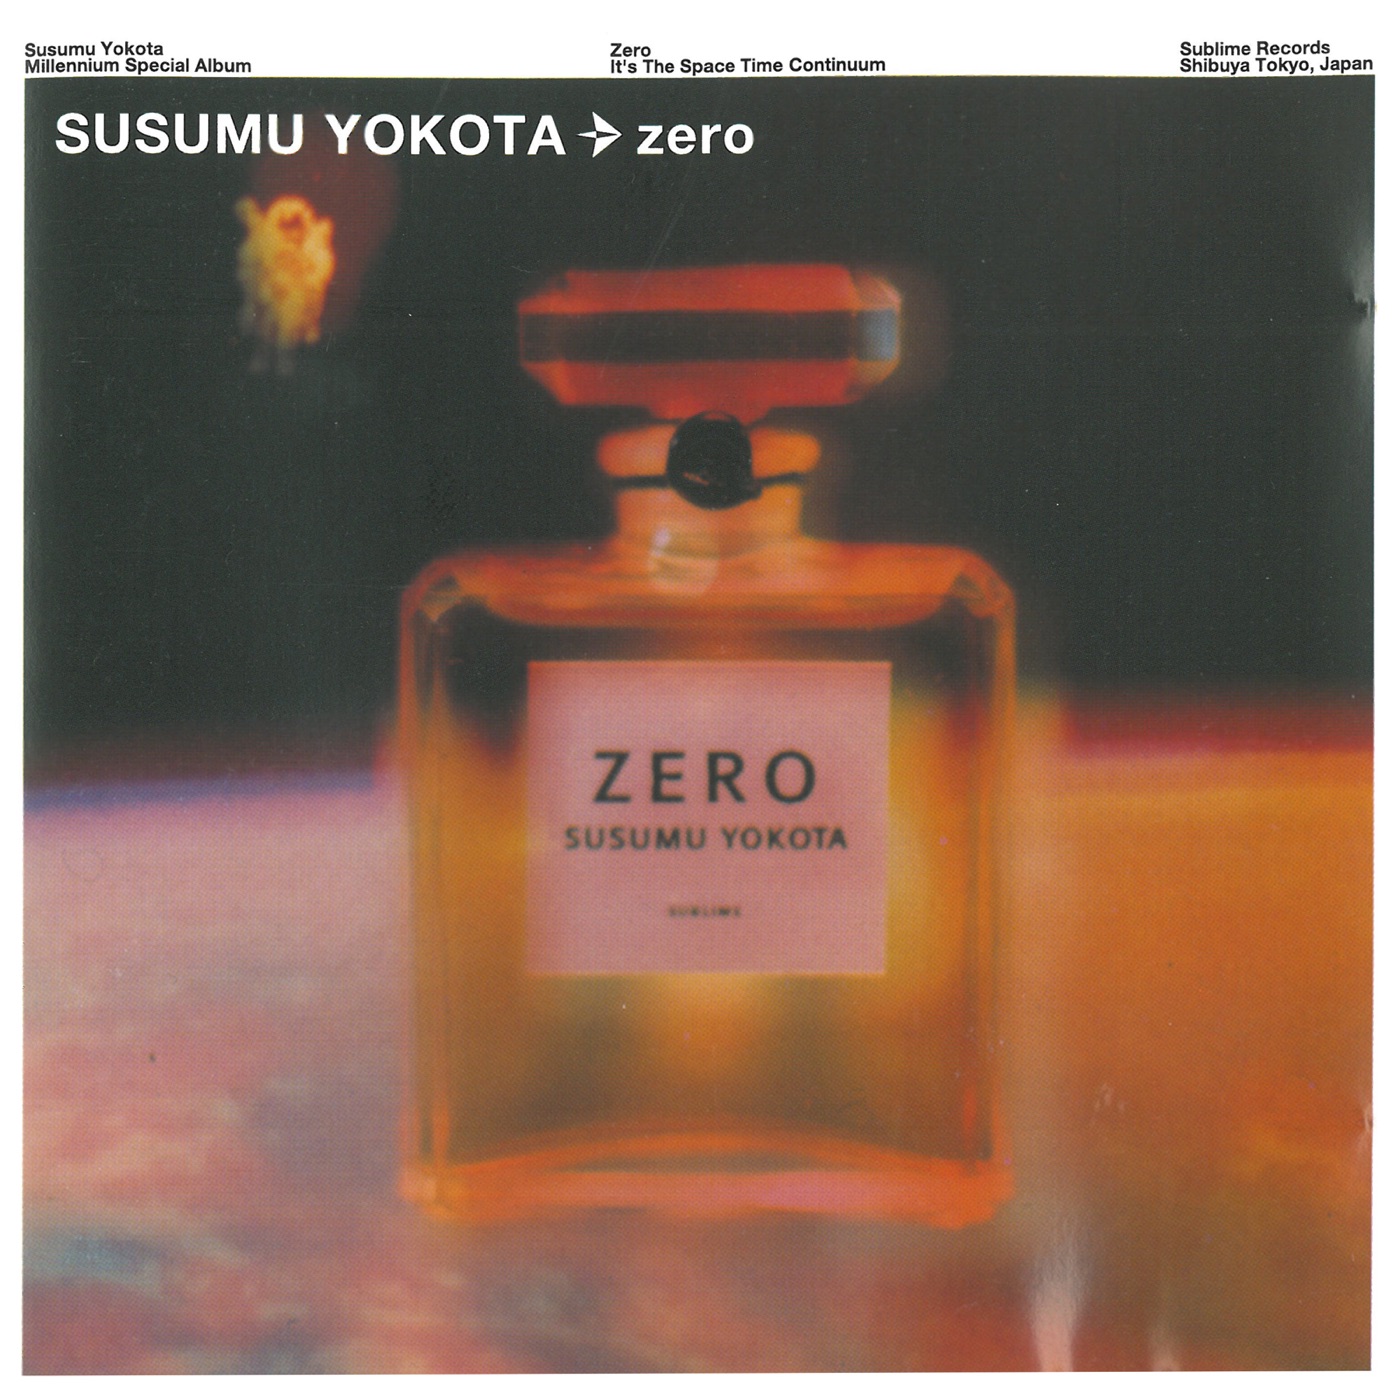 Zero + Come On My World by Susumu Yokota